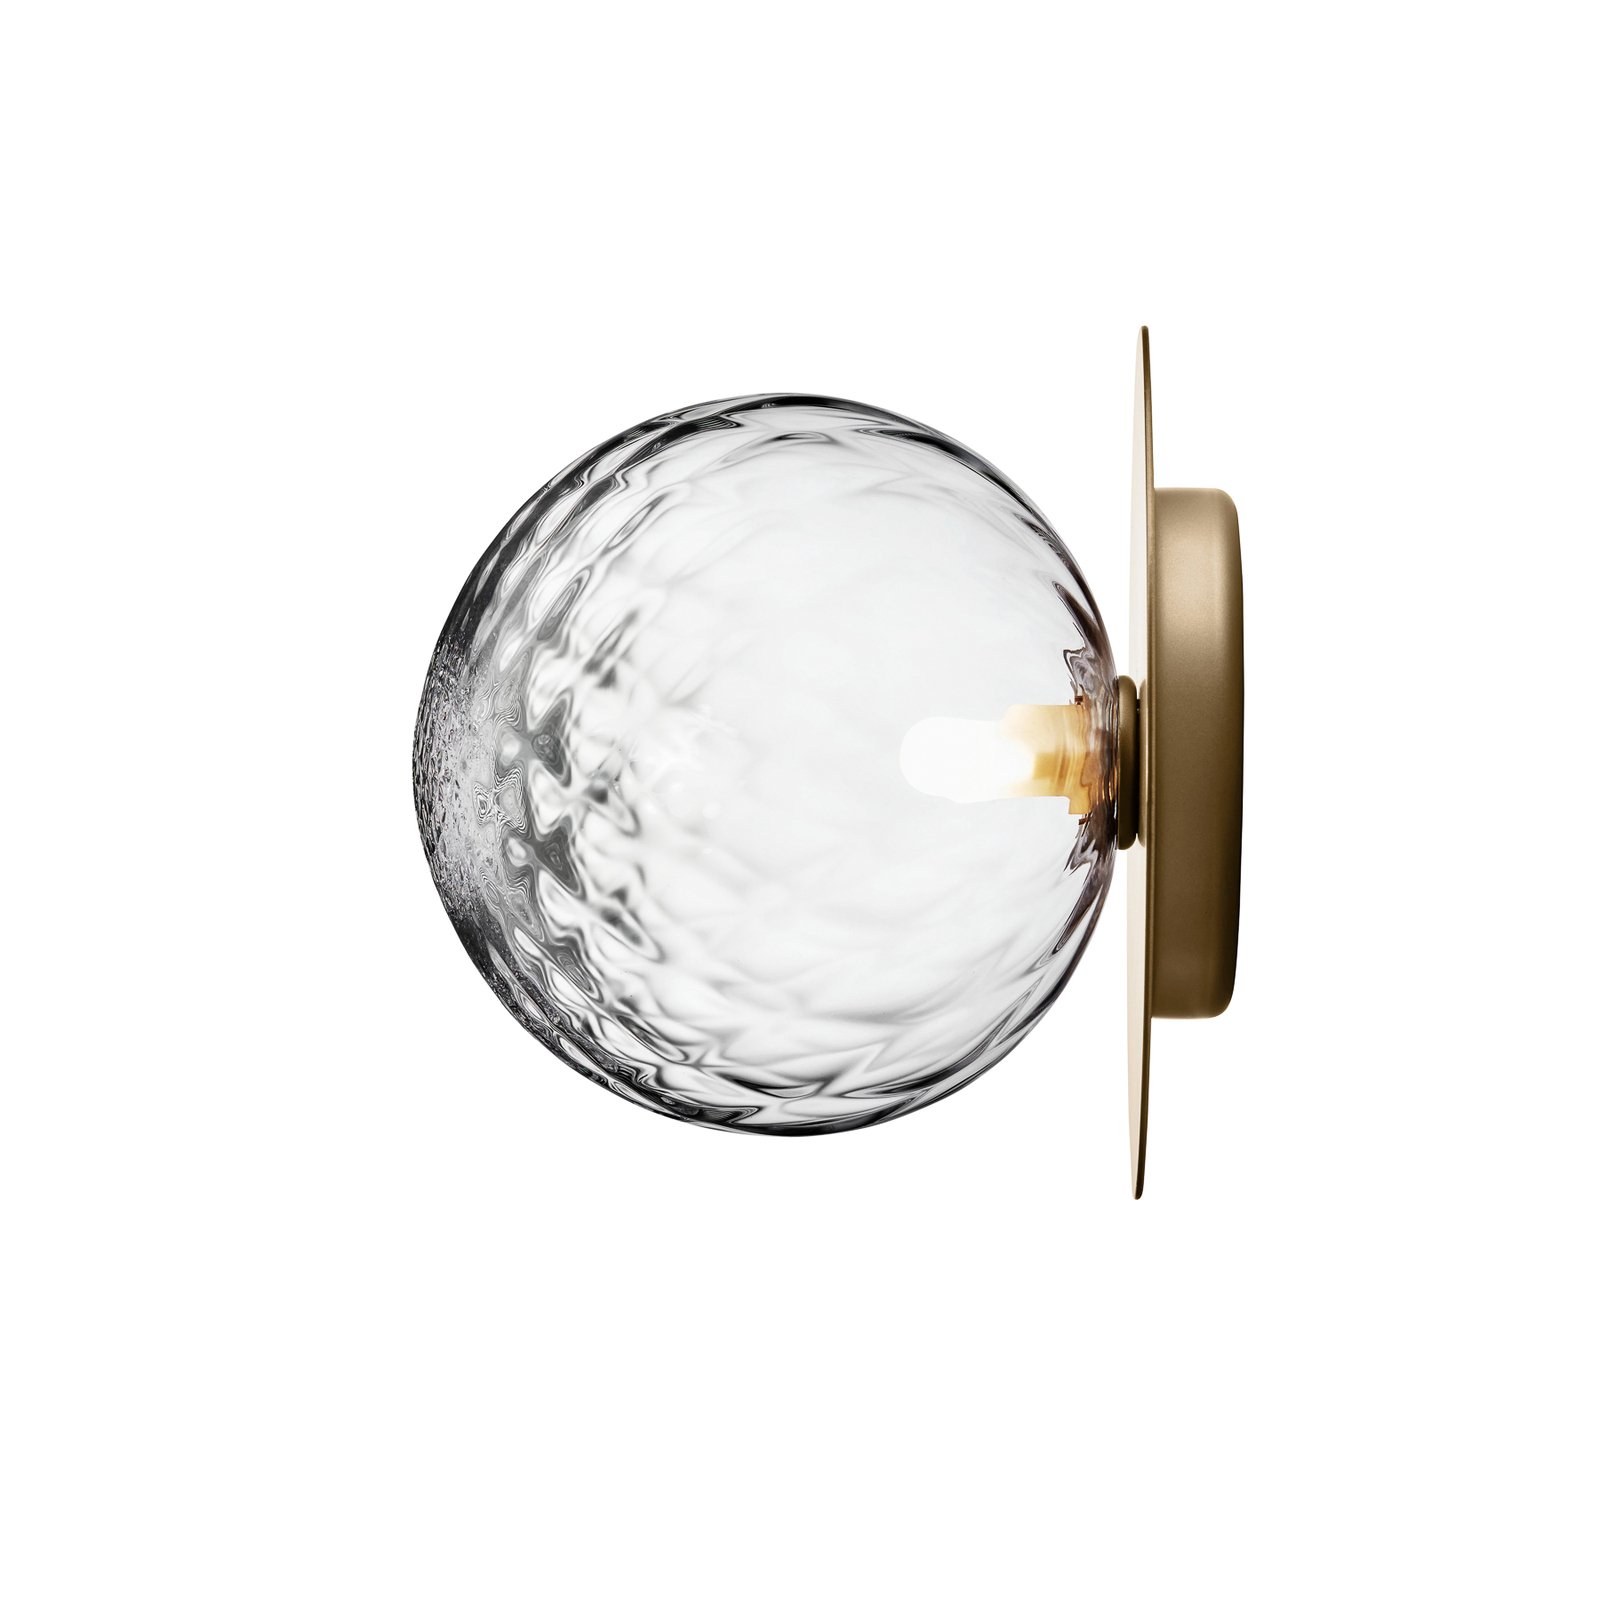 Nuura Liila 1 Large wall light 1-bulb gold/clear